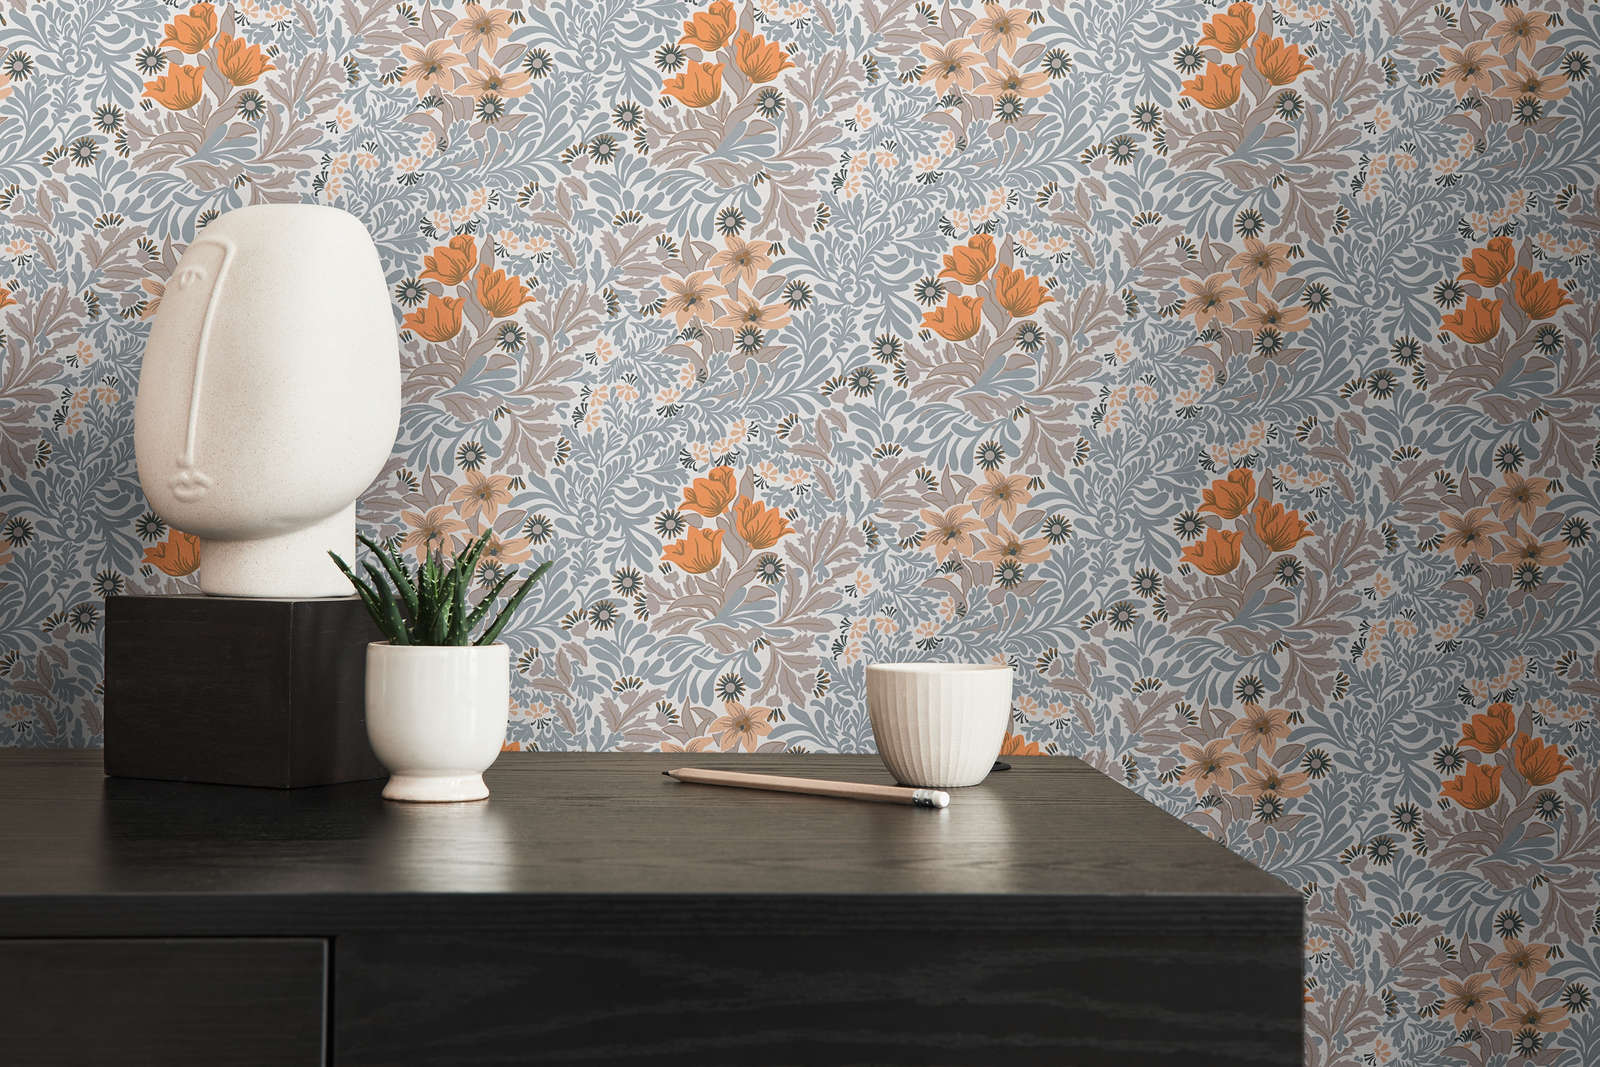             Wallpaper with flowers and leaf tendrils - blue, orange, beige
        